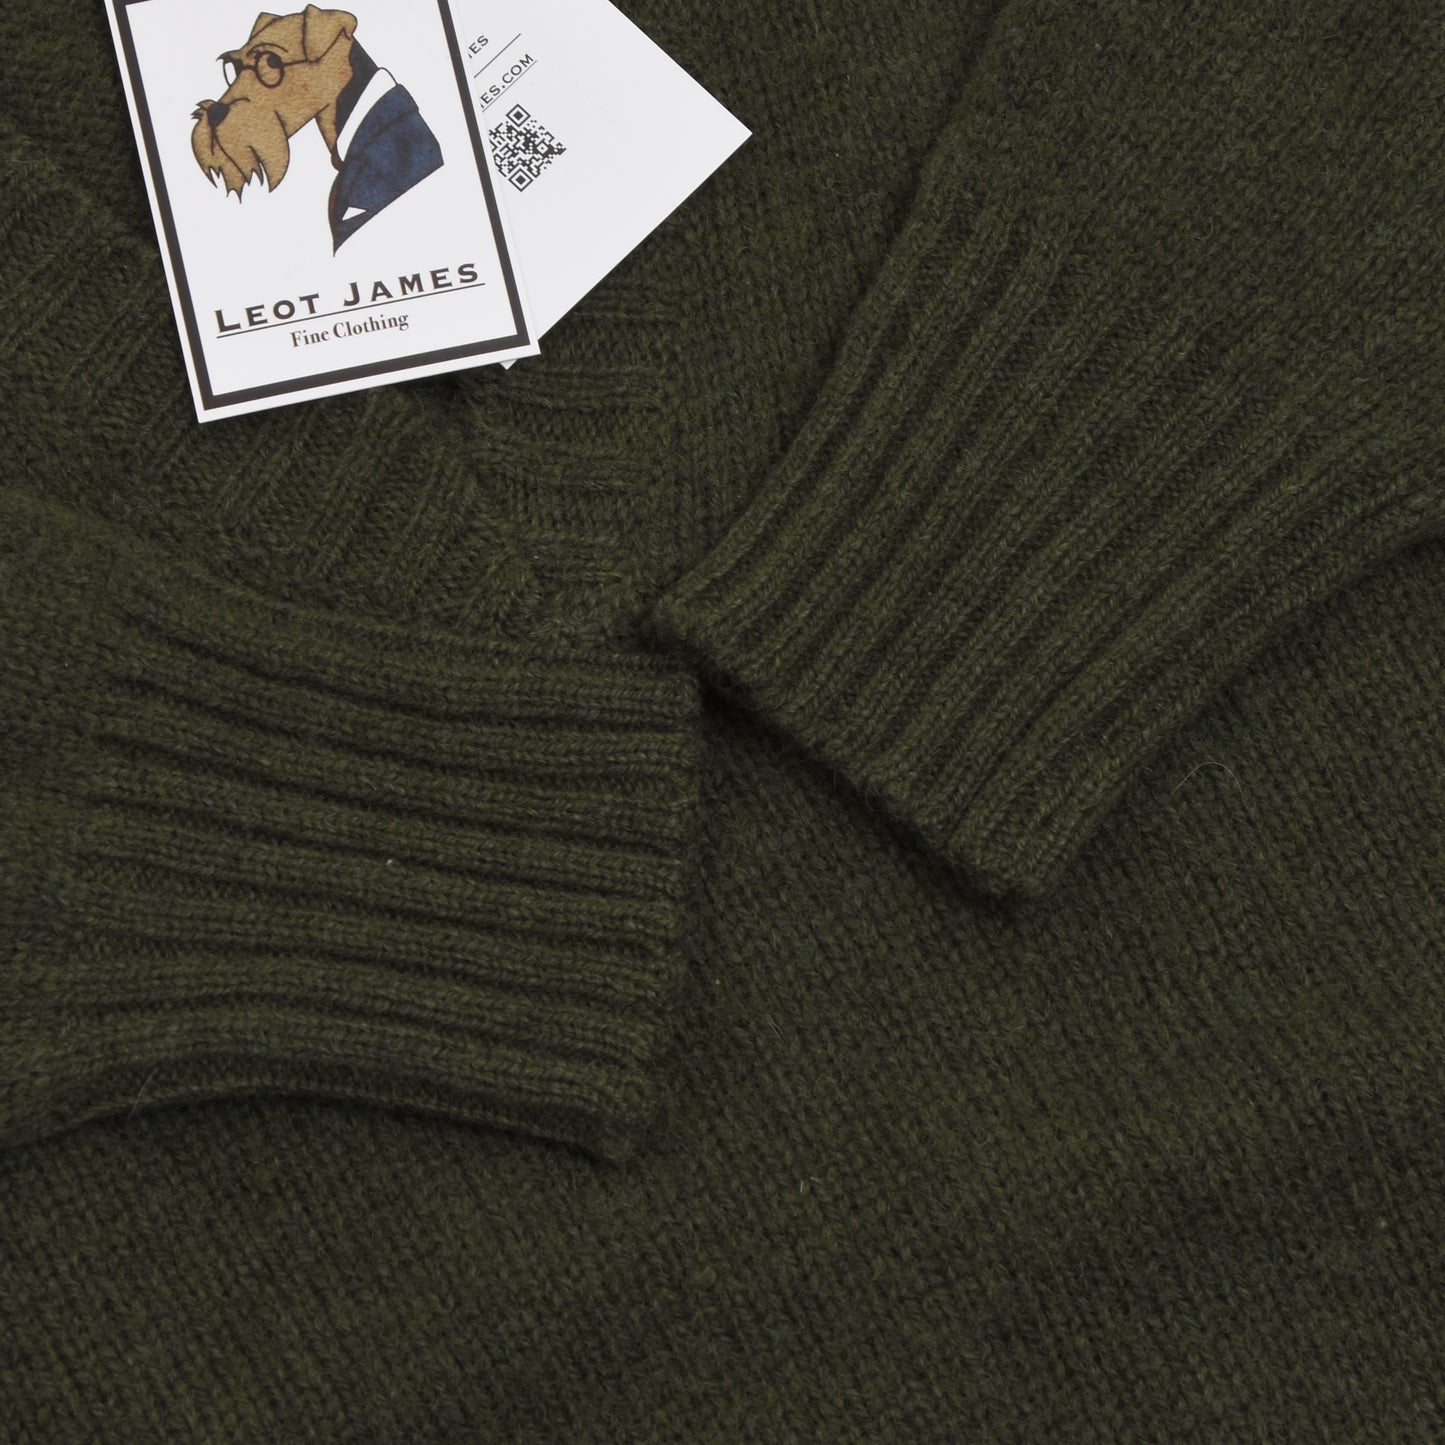 Peter Scott 100% Shetland Wool Sweater - Green